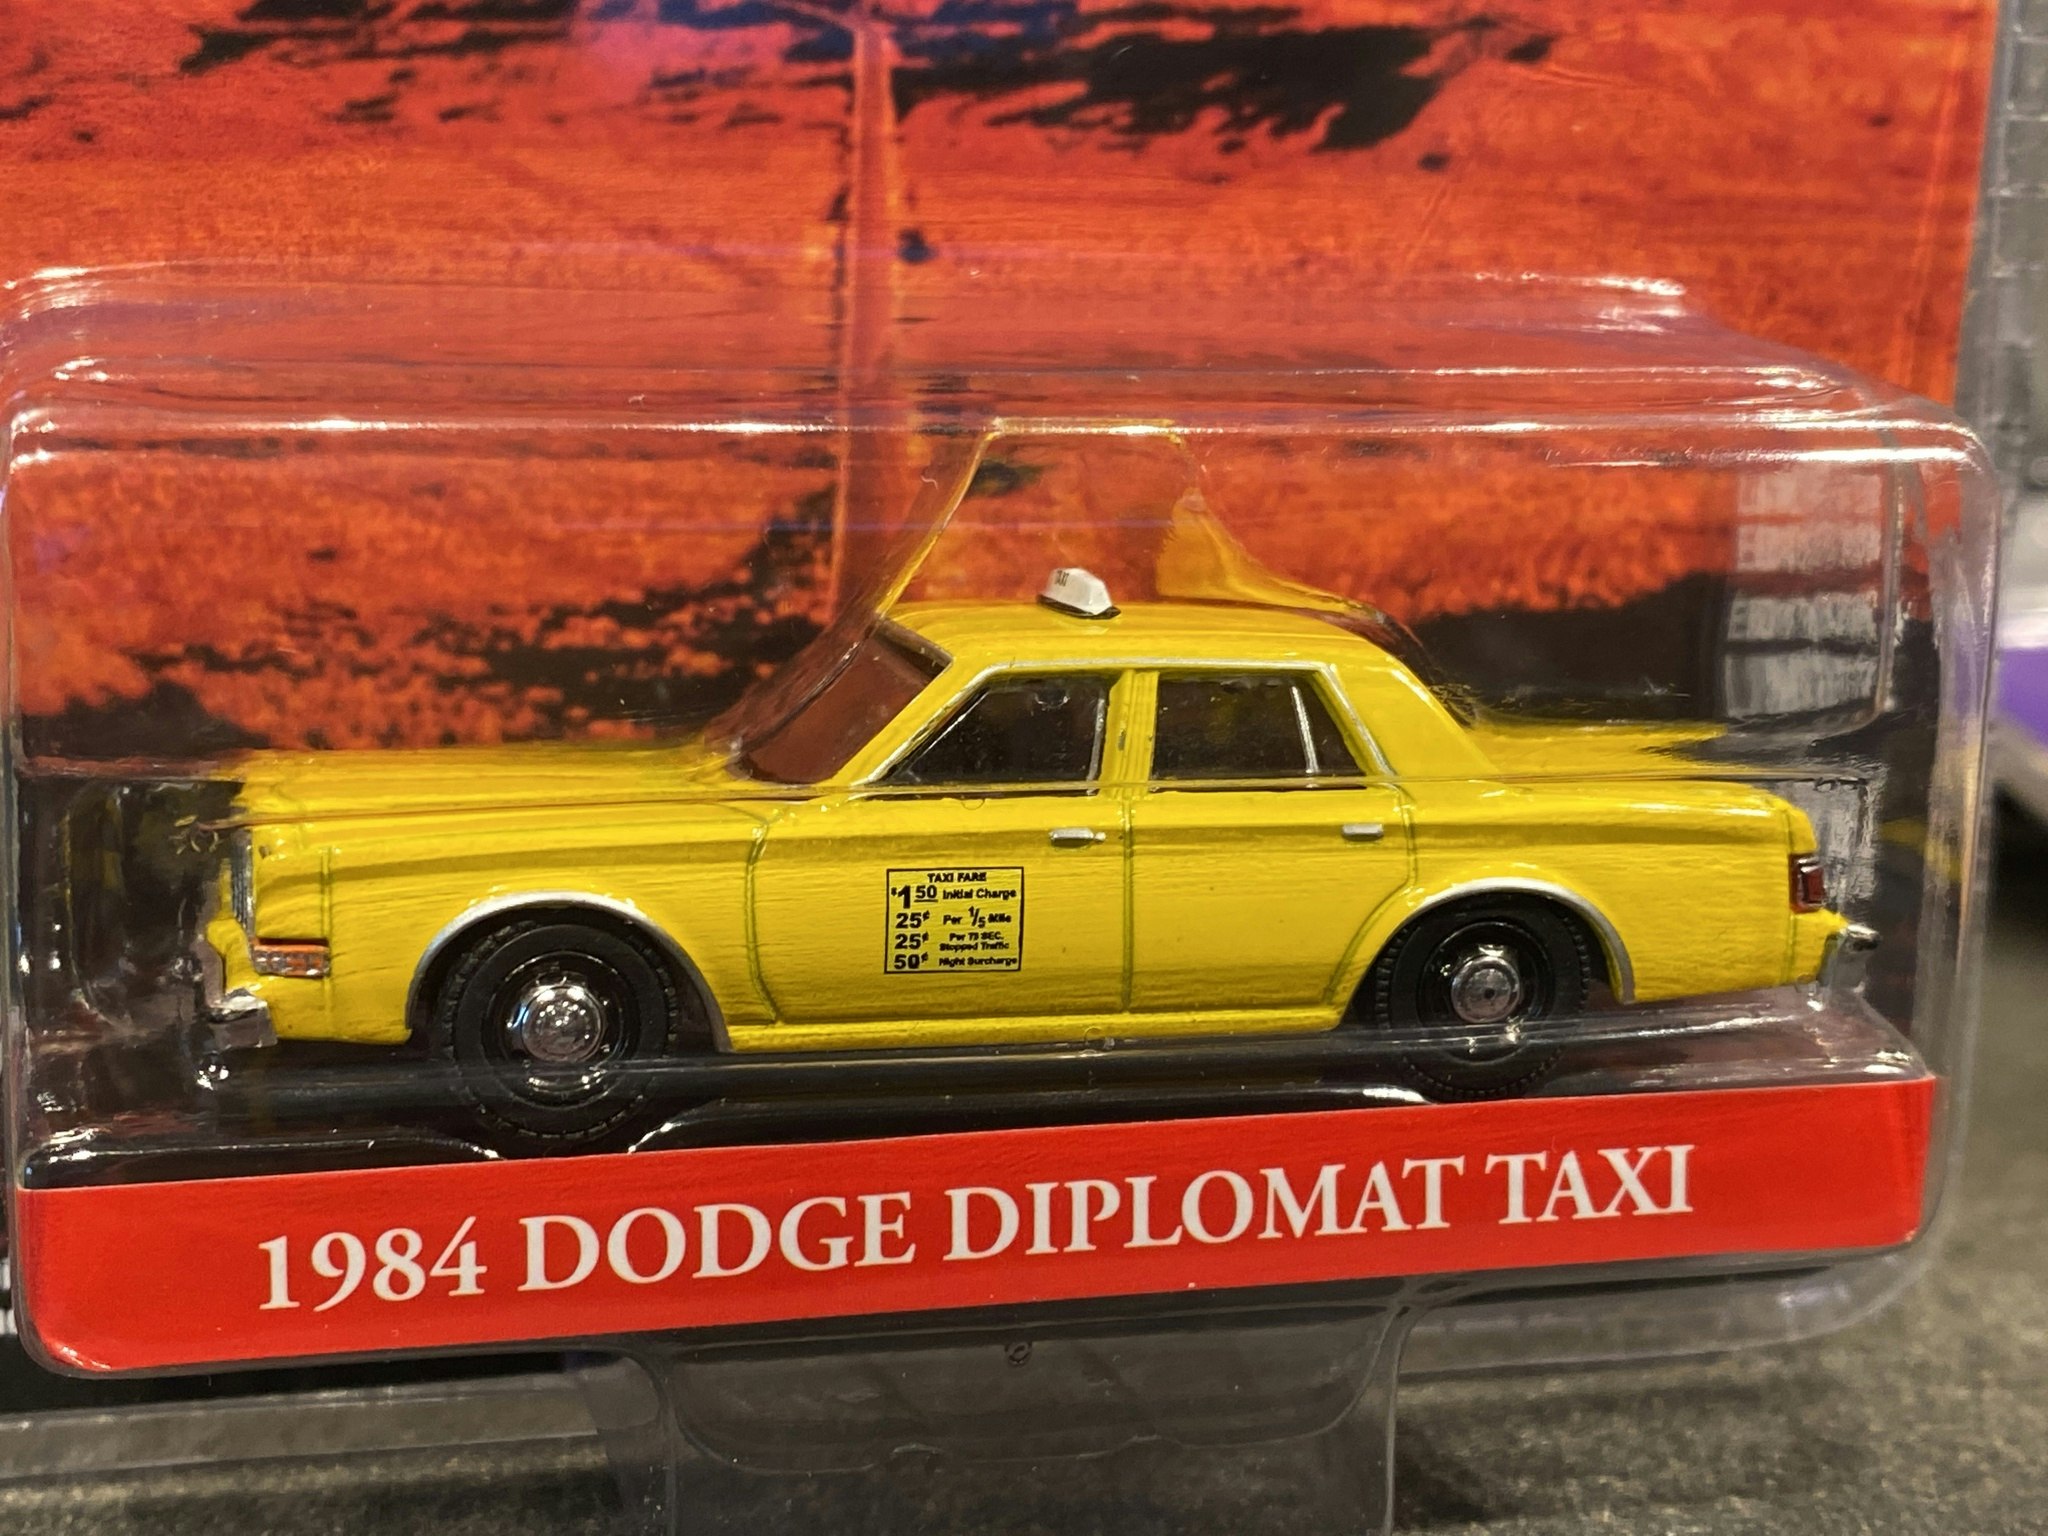 Skala 1/64 Dodge Diplomat 84' Taxi "Thelma & Louise" fr Greenlight